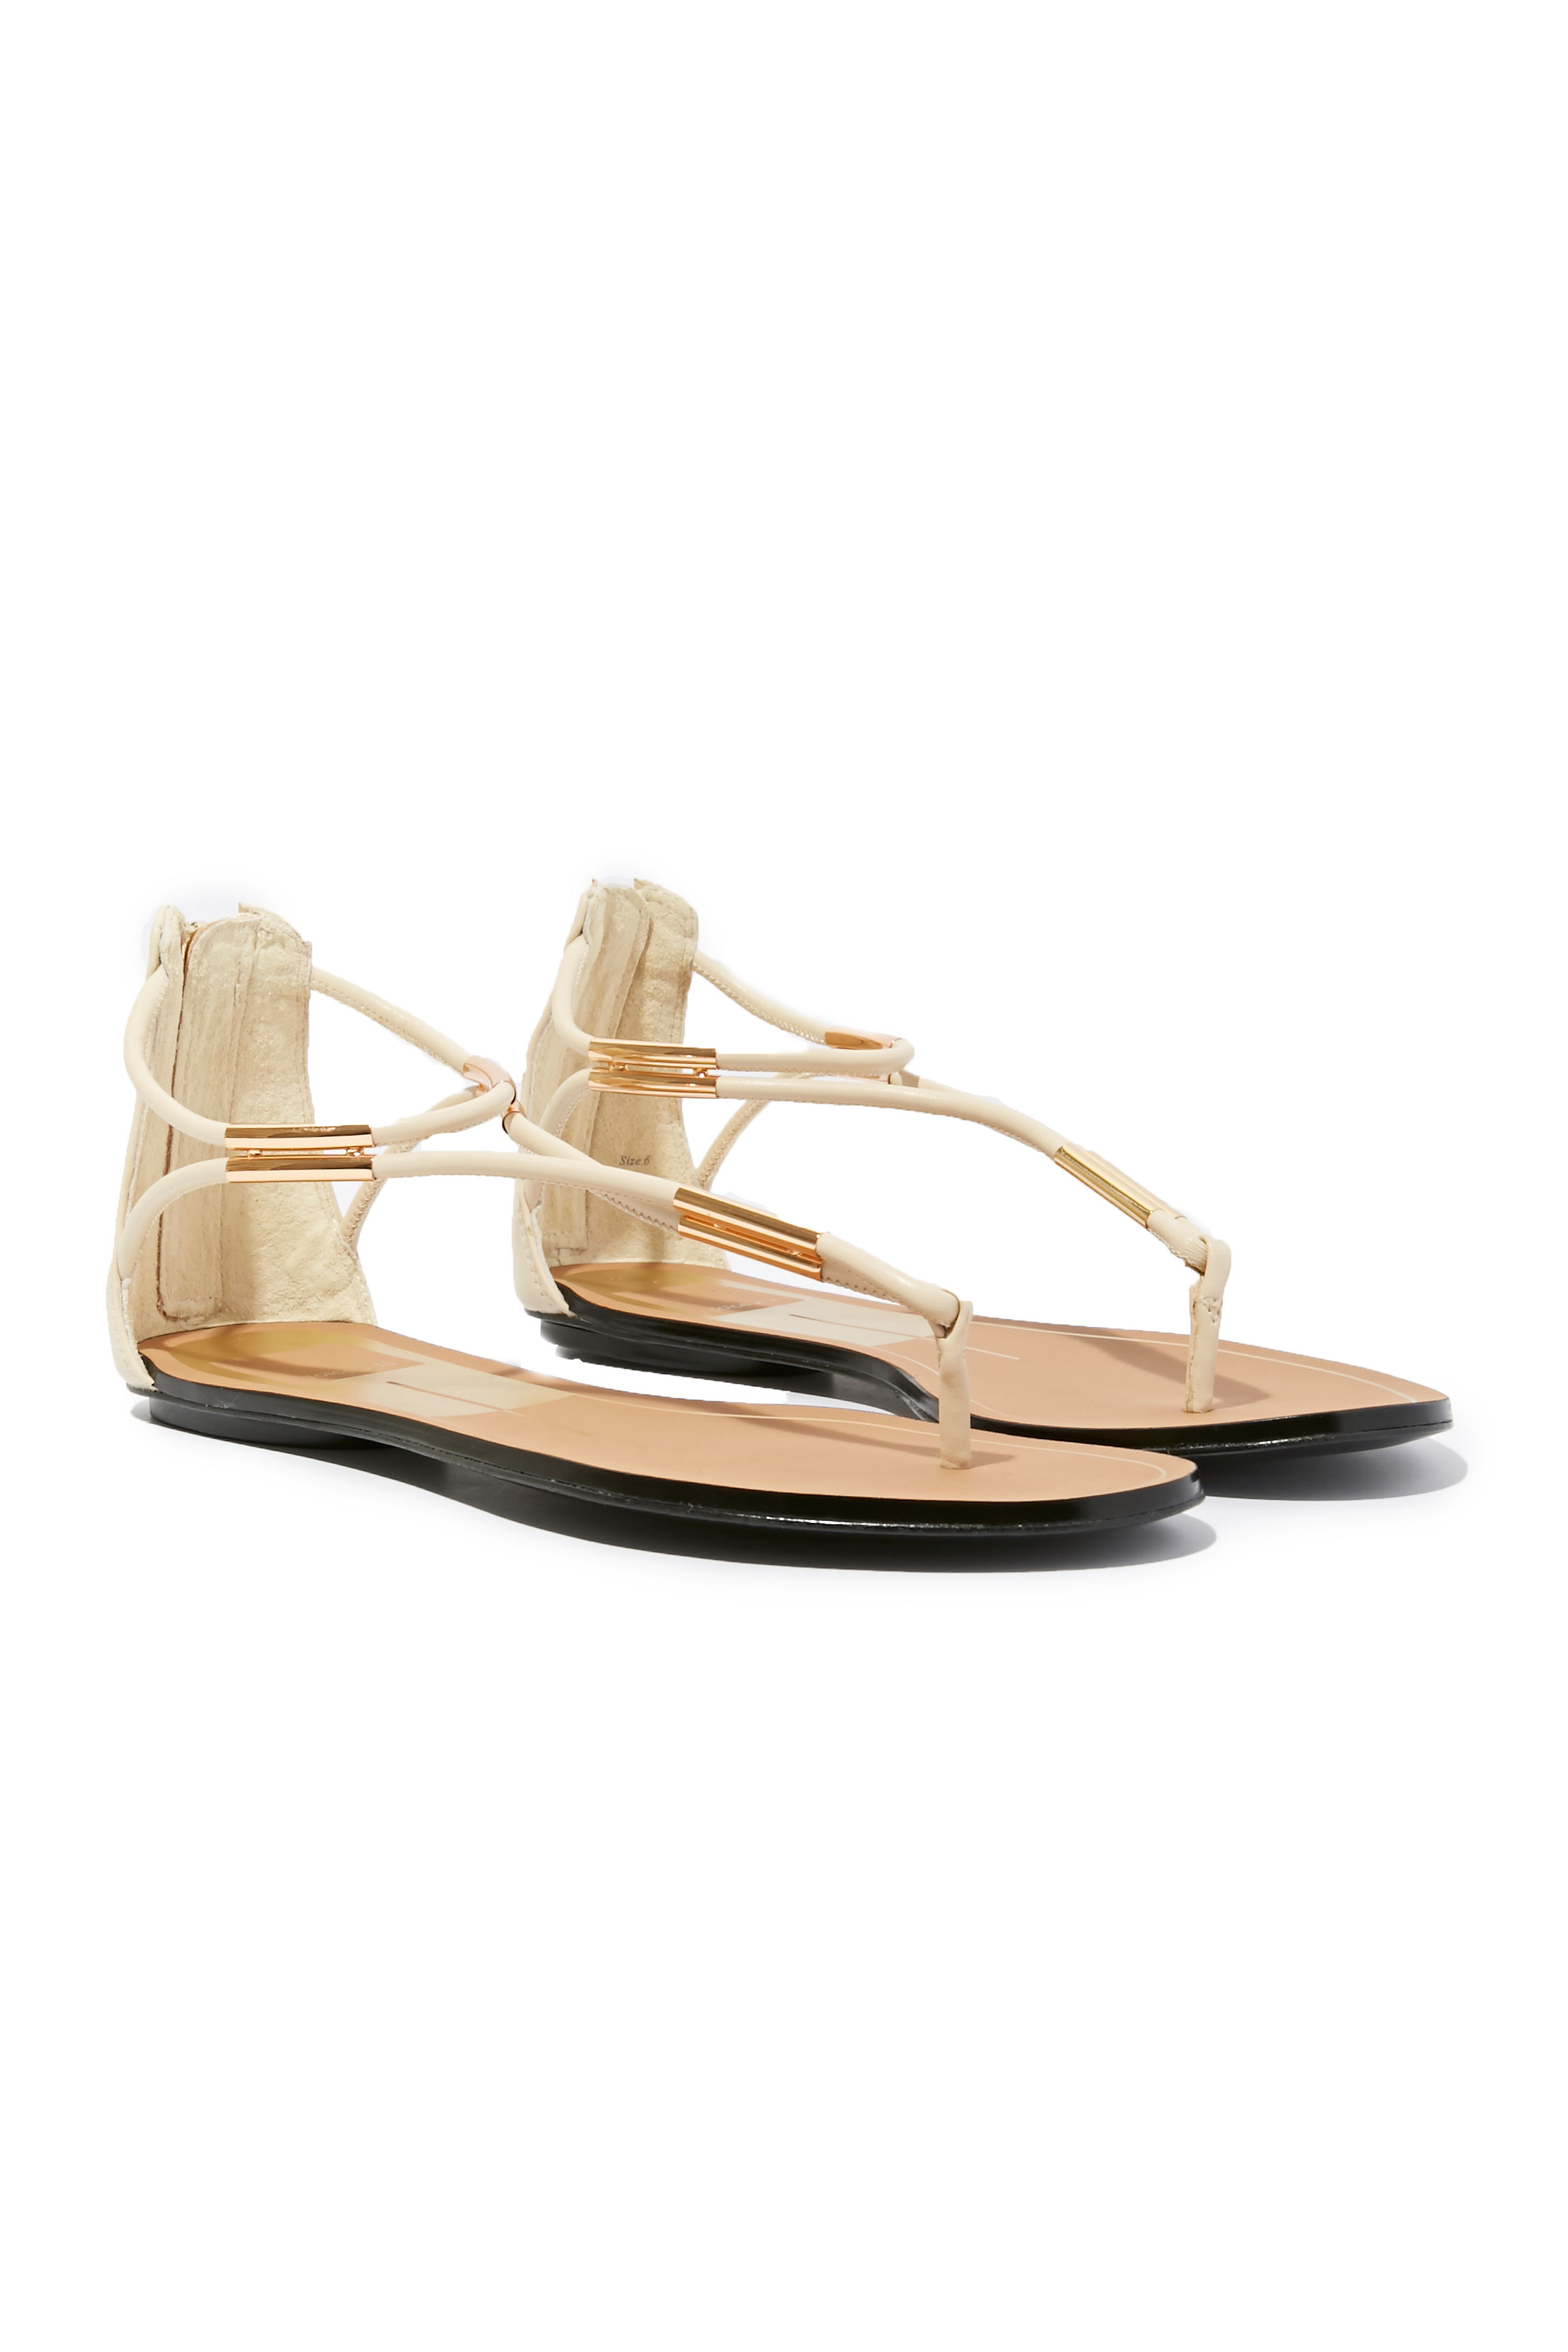 Dolce Vita Marine Flat Sandals in Cream | DAILYLOOK